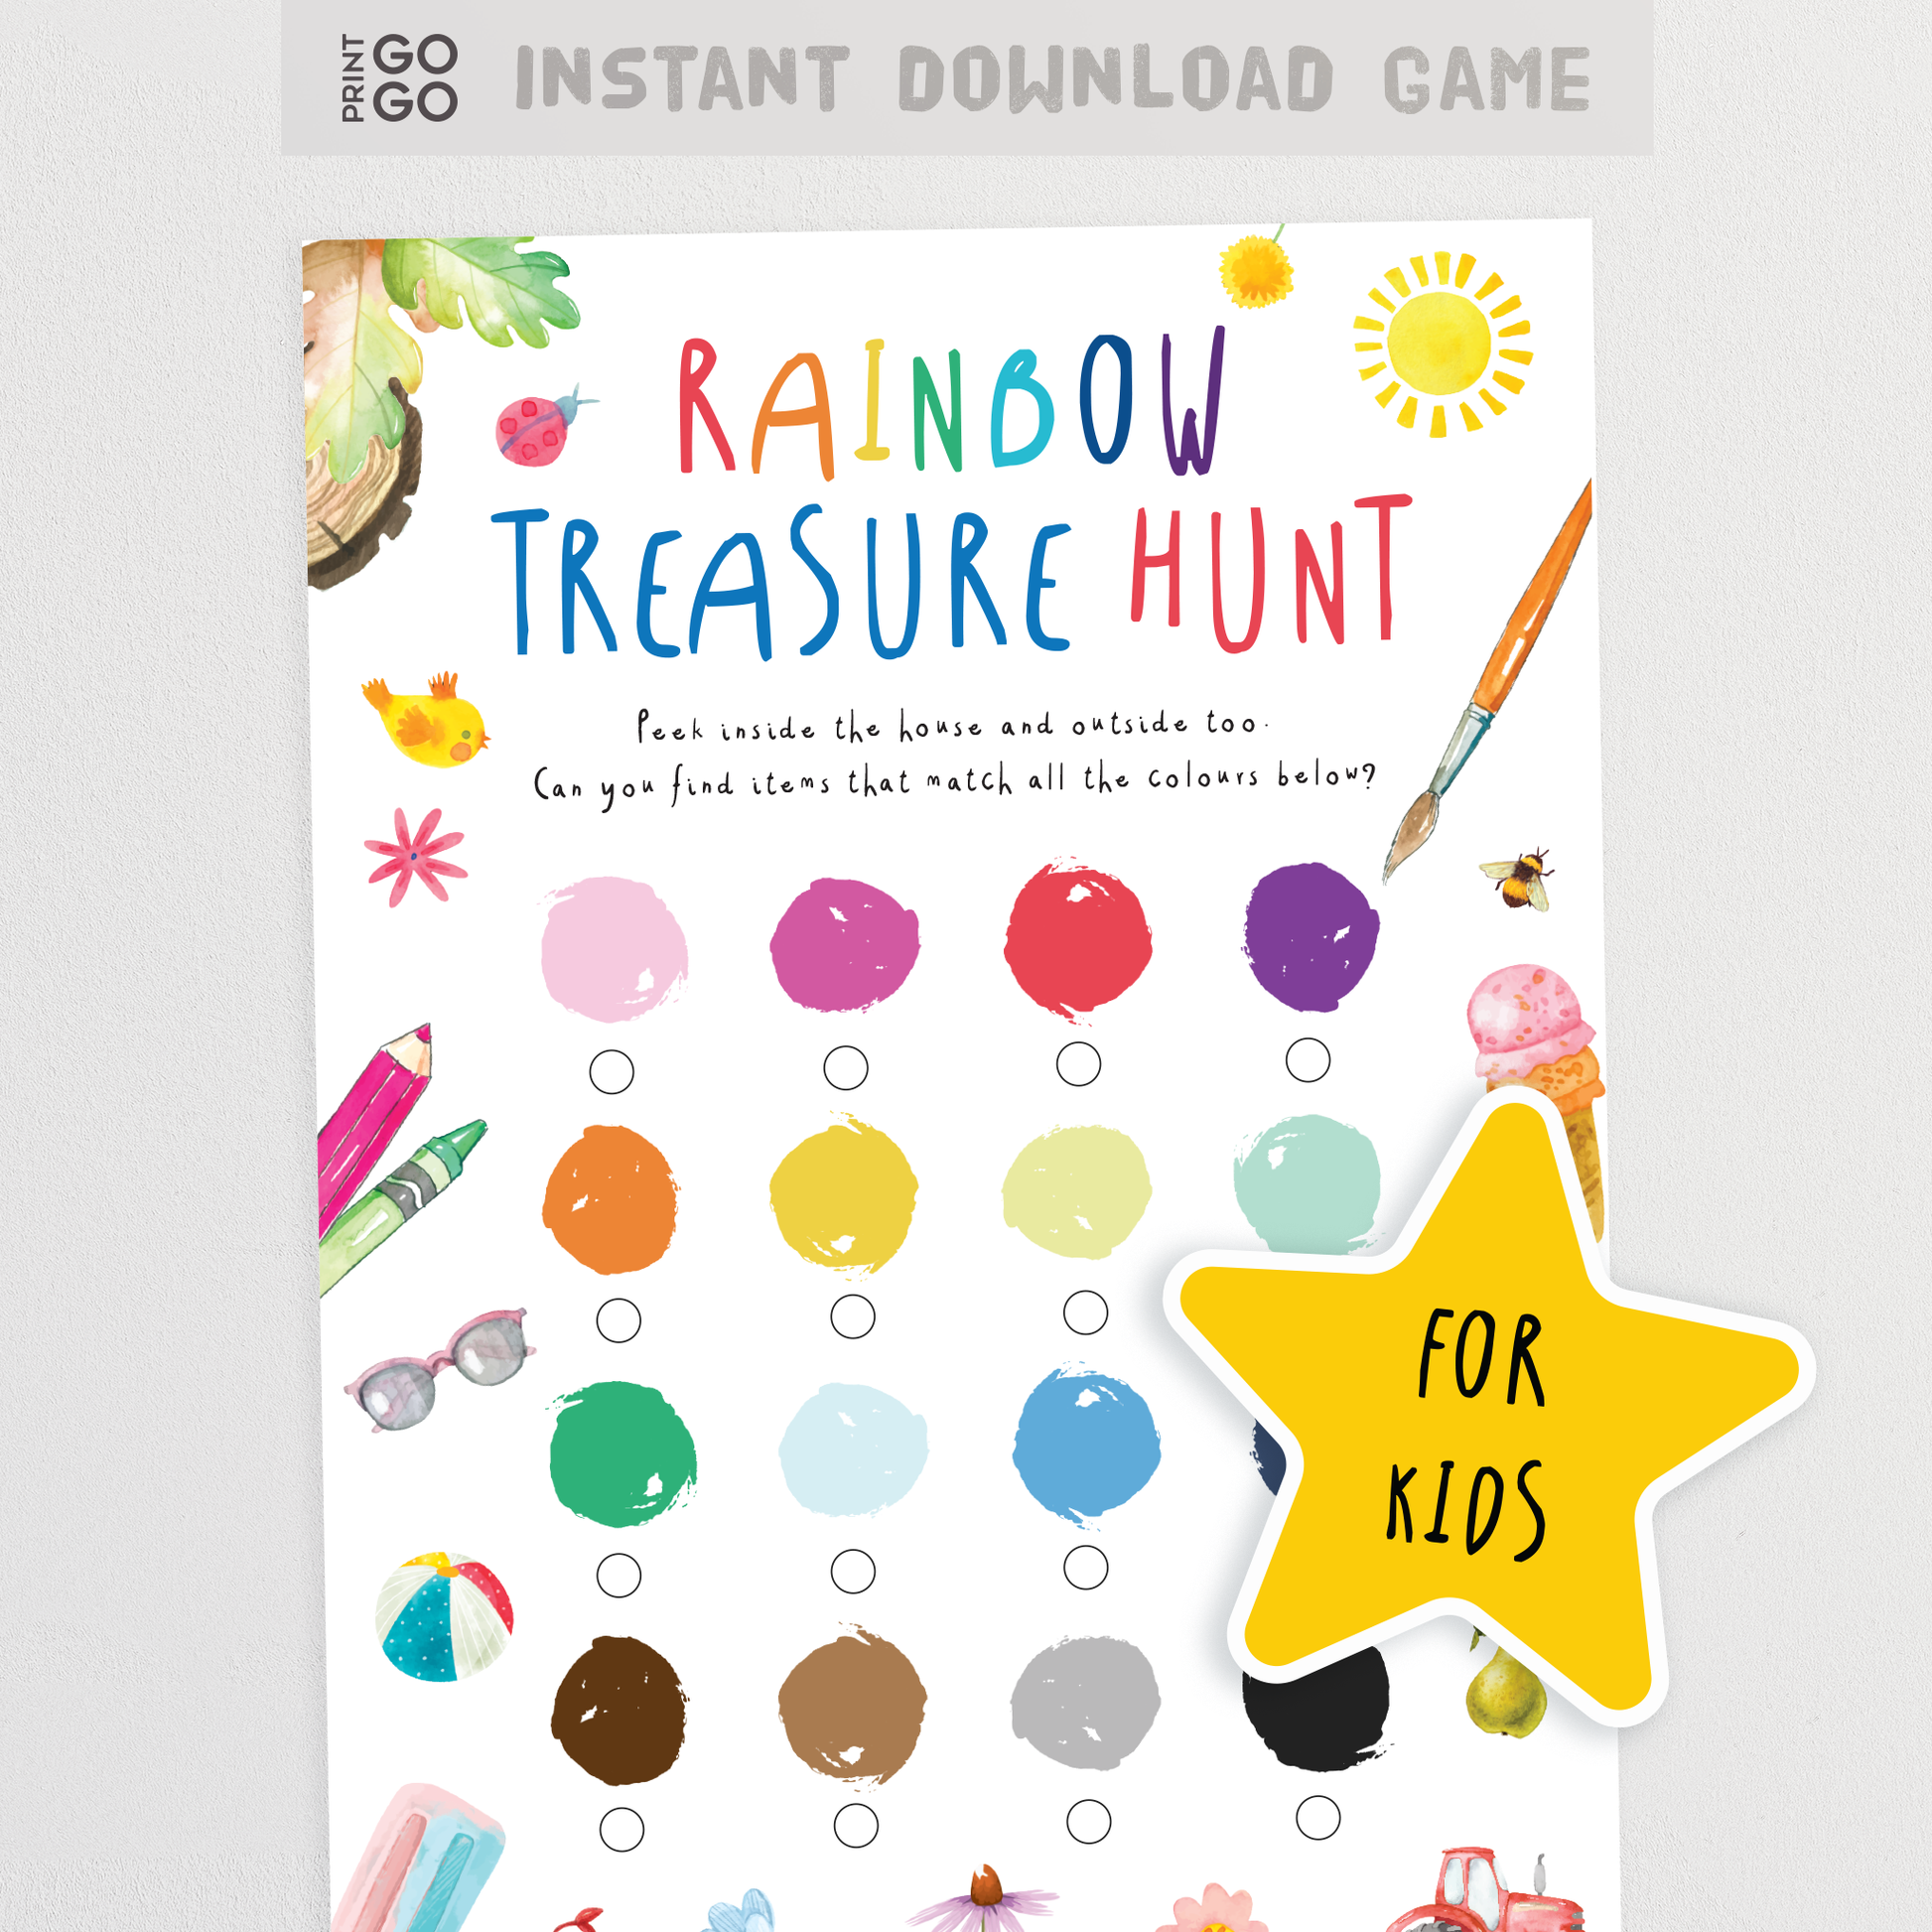 Rainbow Treasure Hunt for Kids